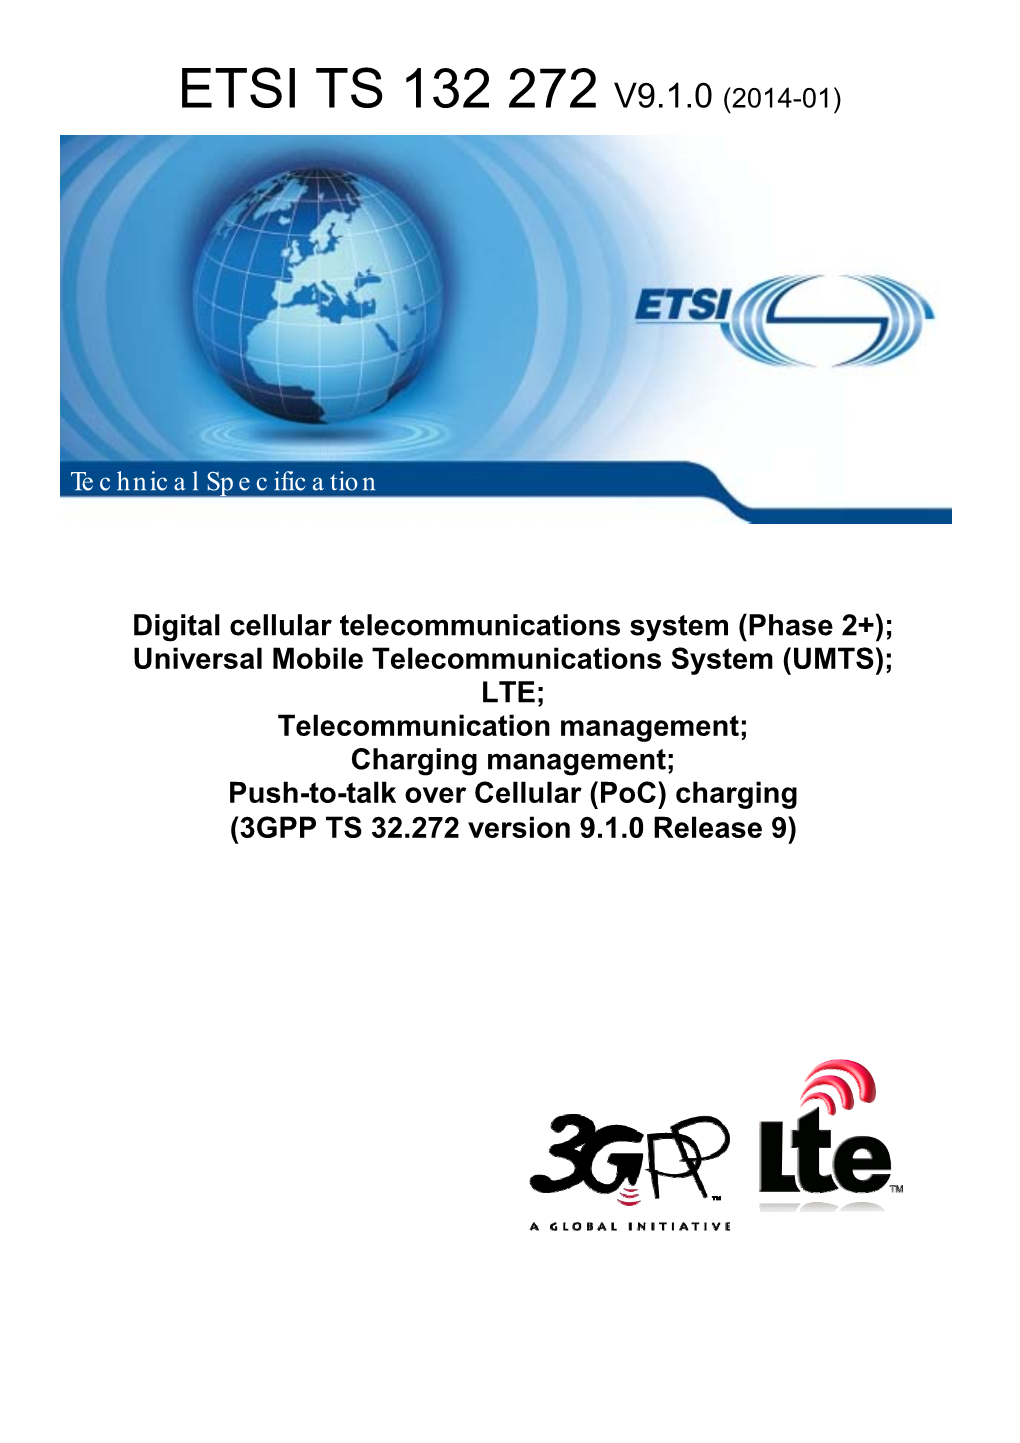 UMTS); LTE; Telecommunication Management; Charging Management; Push-To-Talk Over Cellular (Poc) Charging (3GPP TS 32.272 Version 9.1.0 Release 9)